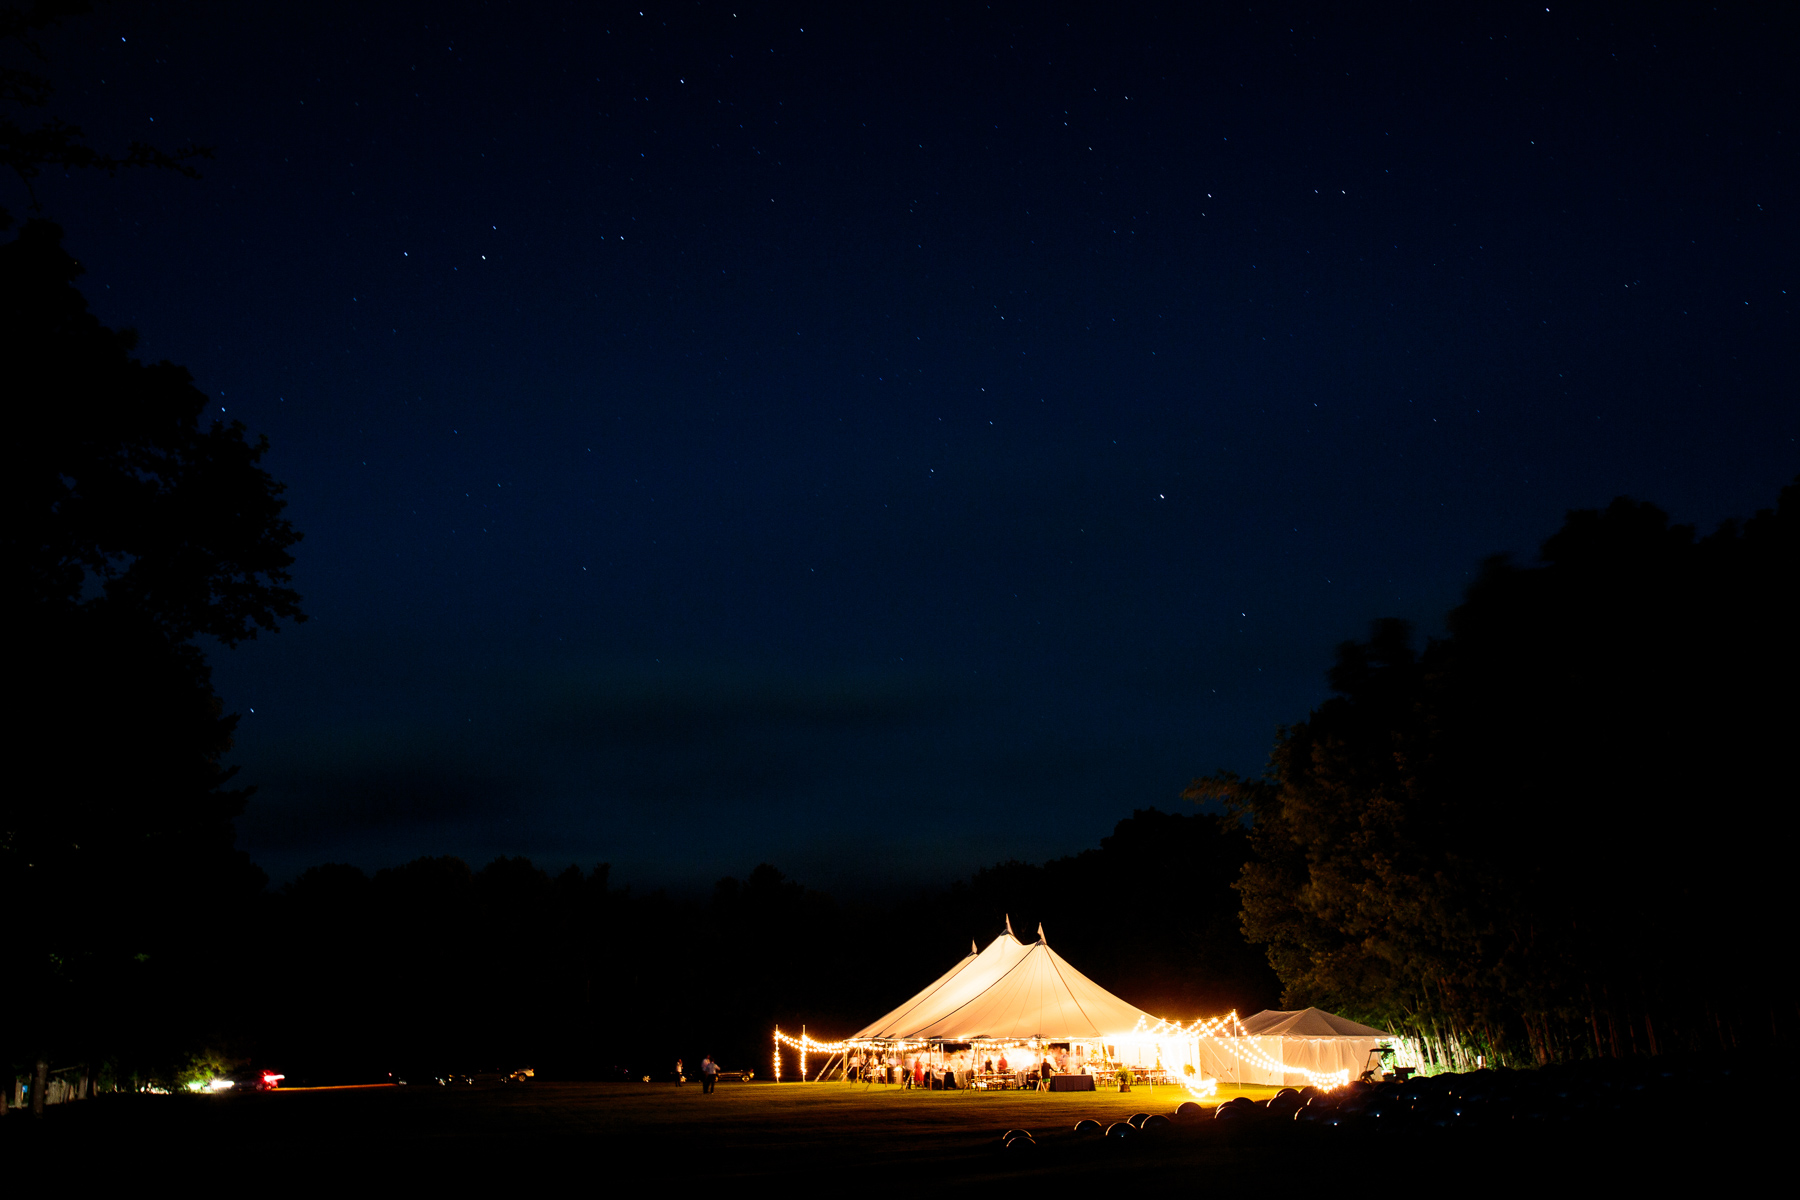 chesterwood tent wedding at night